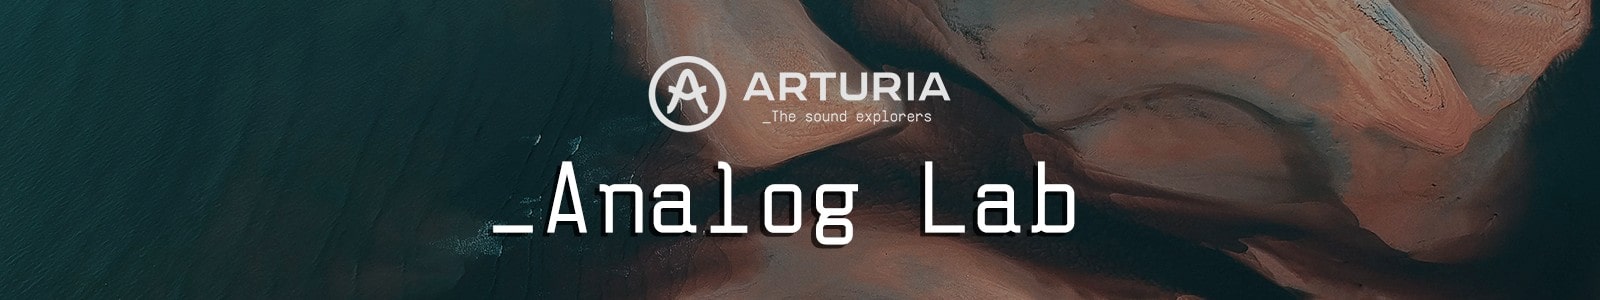 Analog Lab Pro + Beats Explorations Sound Pack by Arturia